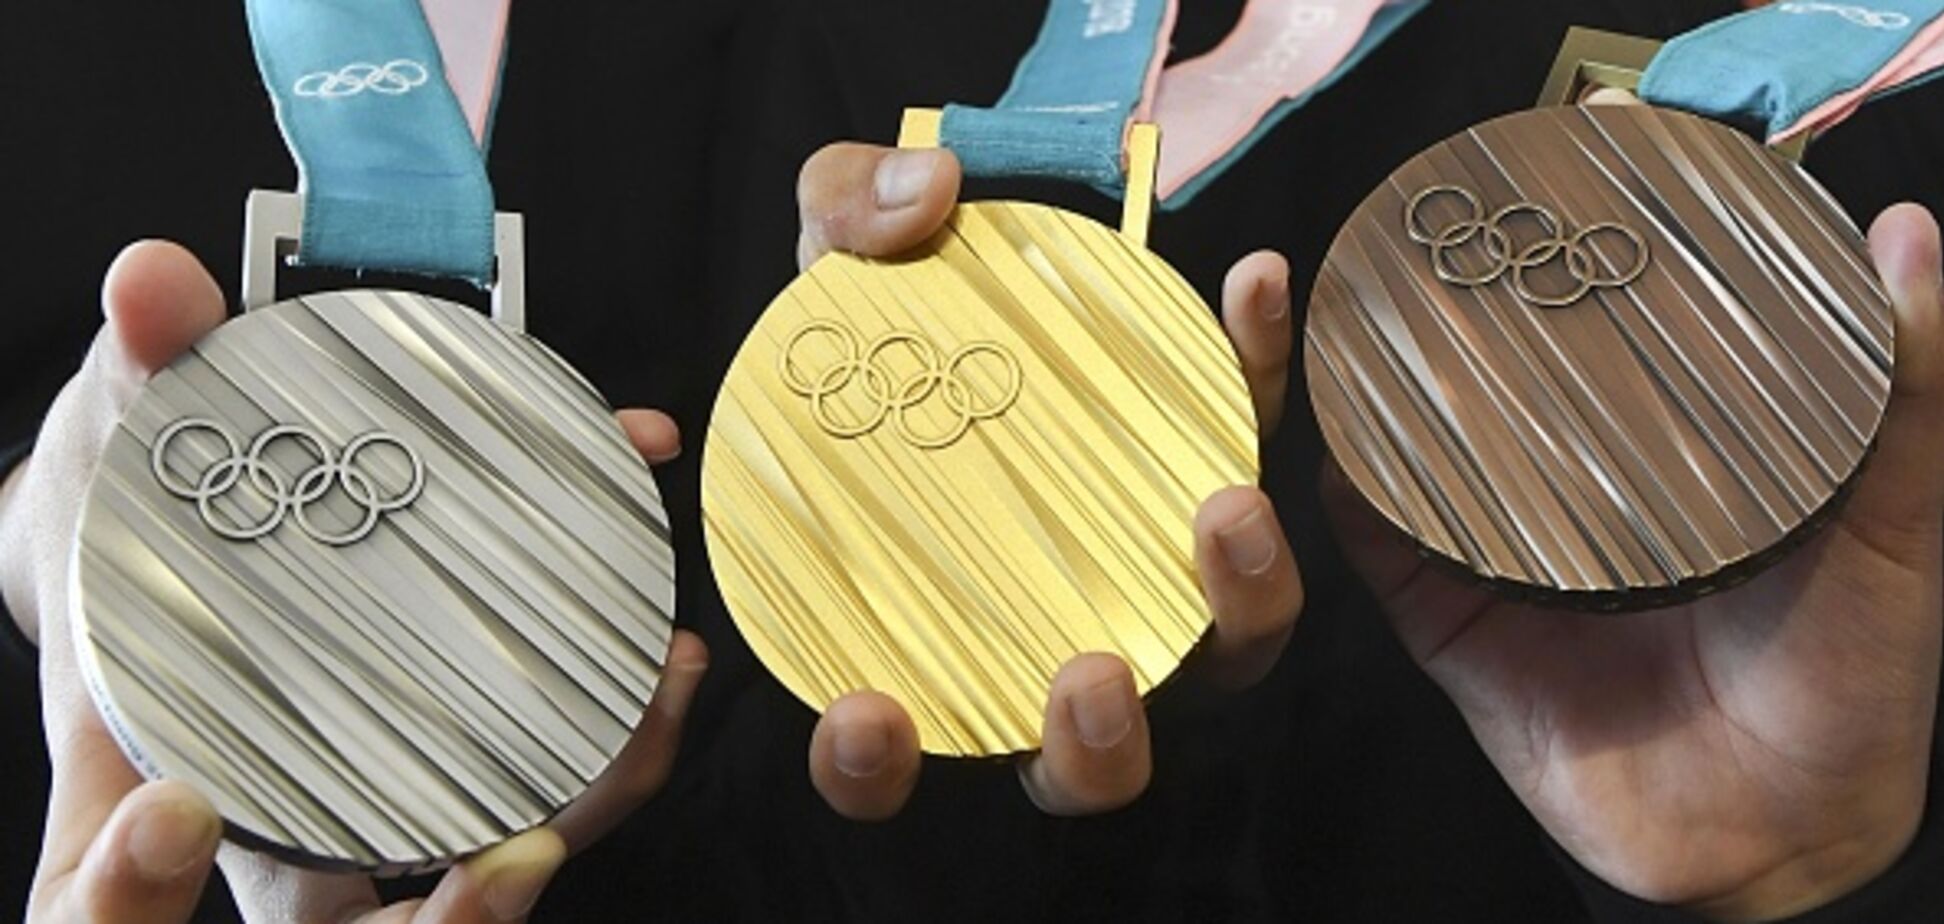 Олимпийские медали